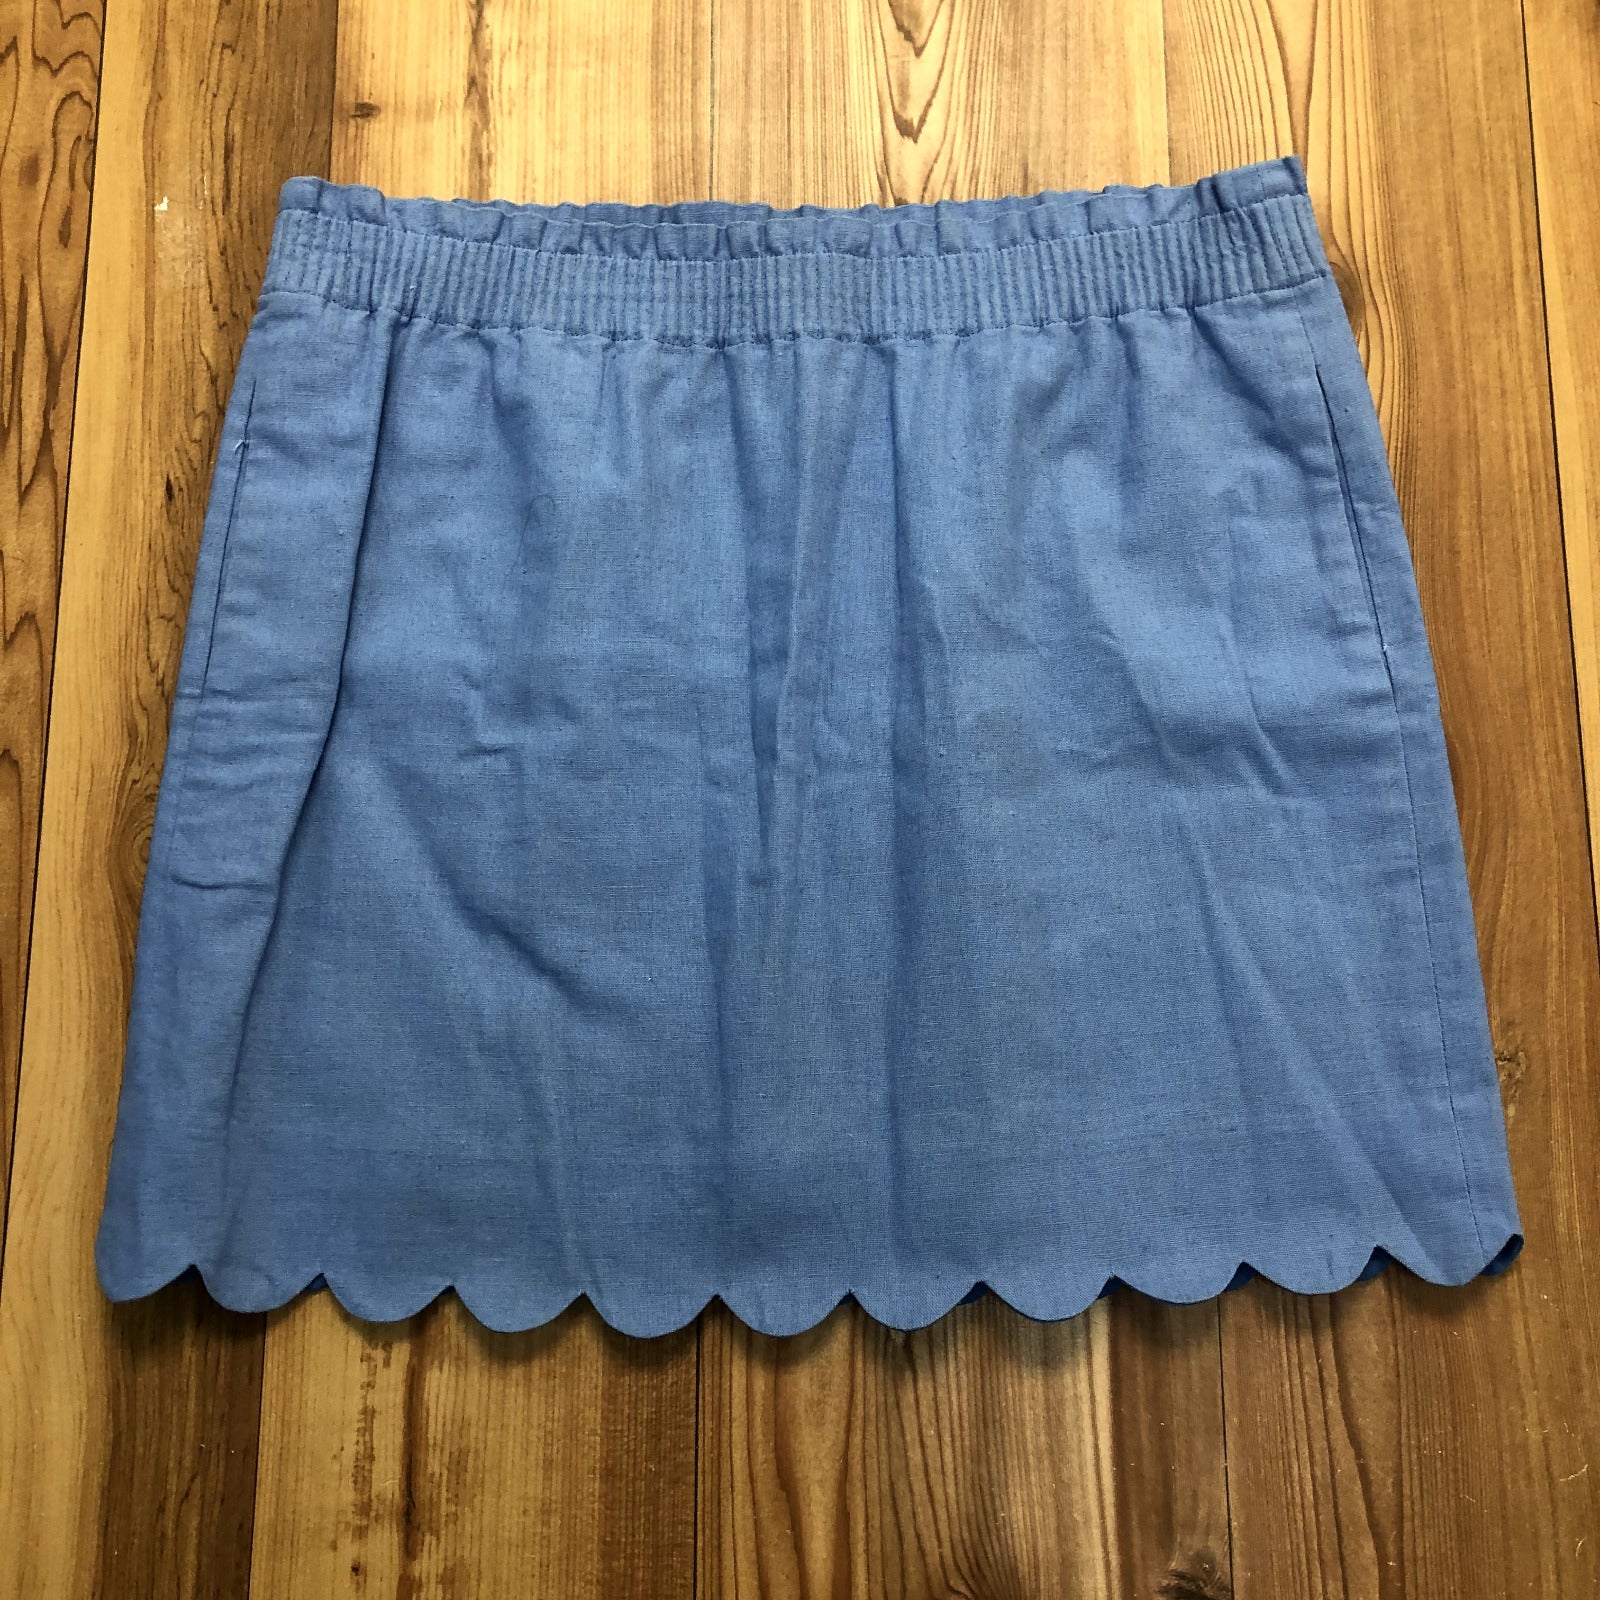 J. by J. Crew Blue Linen Elastic Waste Pull On Short Lined Skirt Womens Size 4